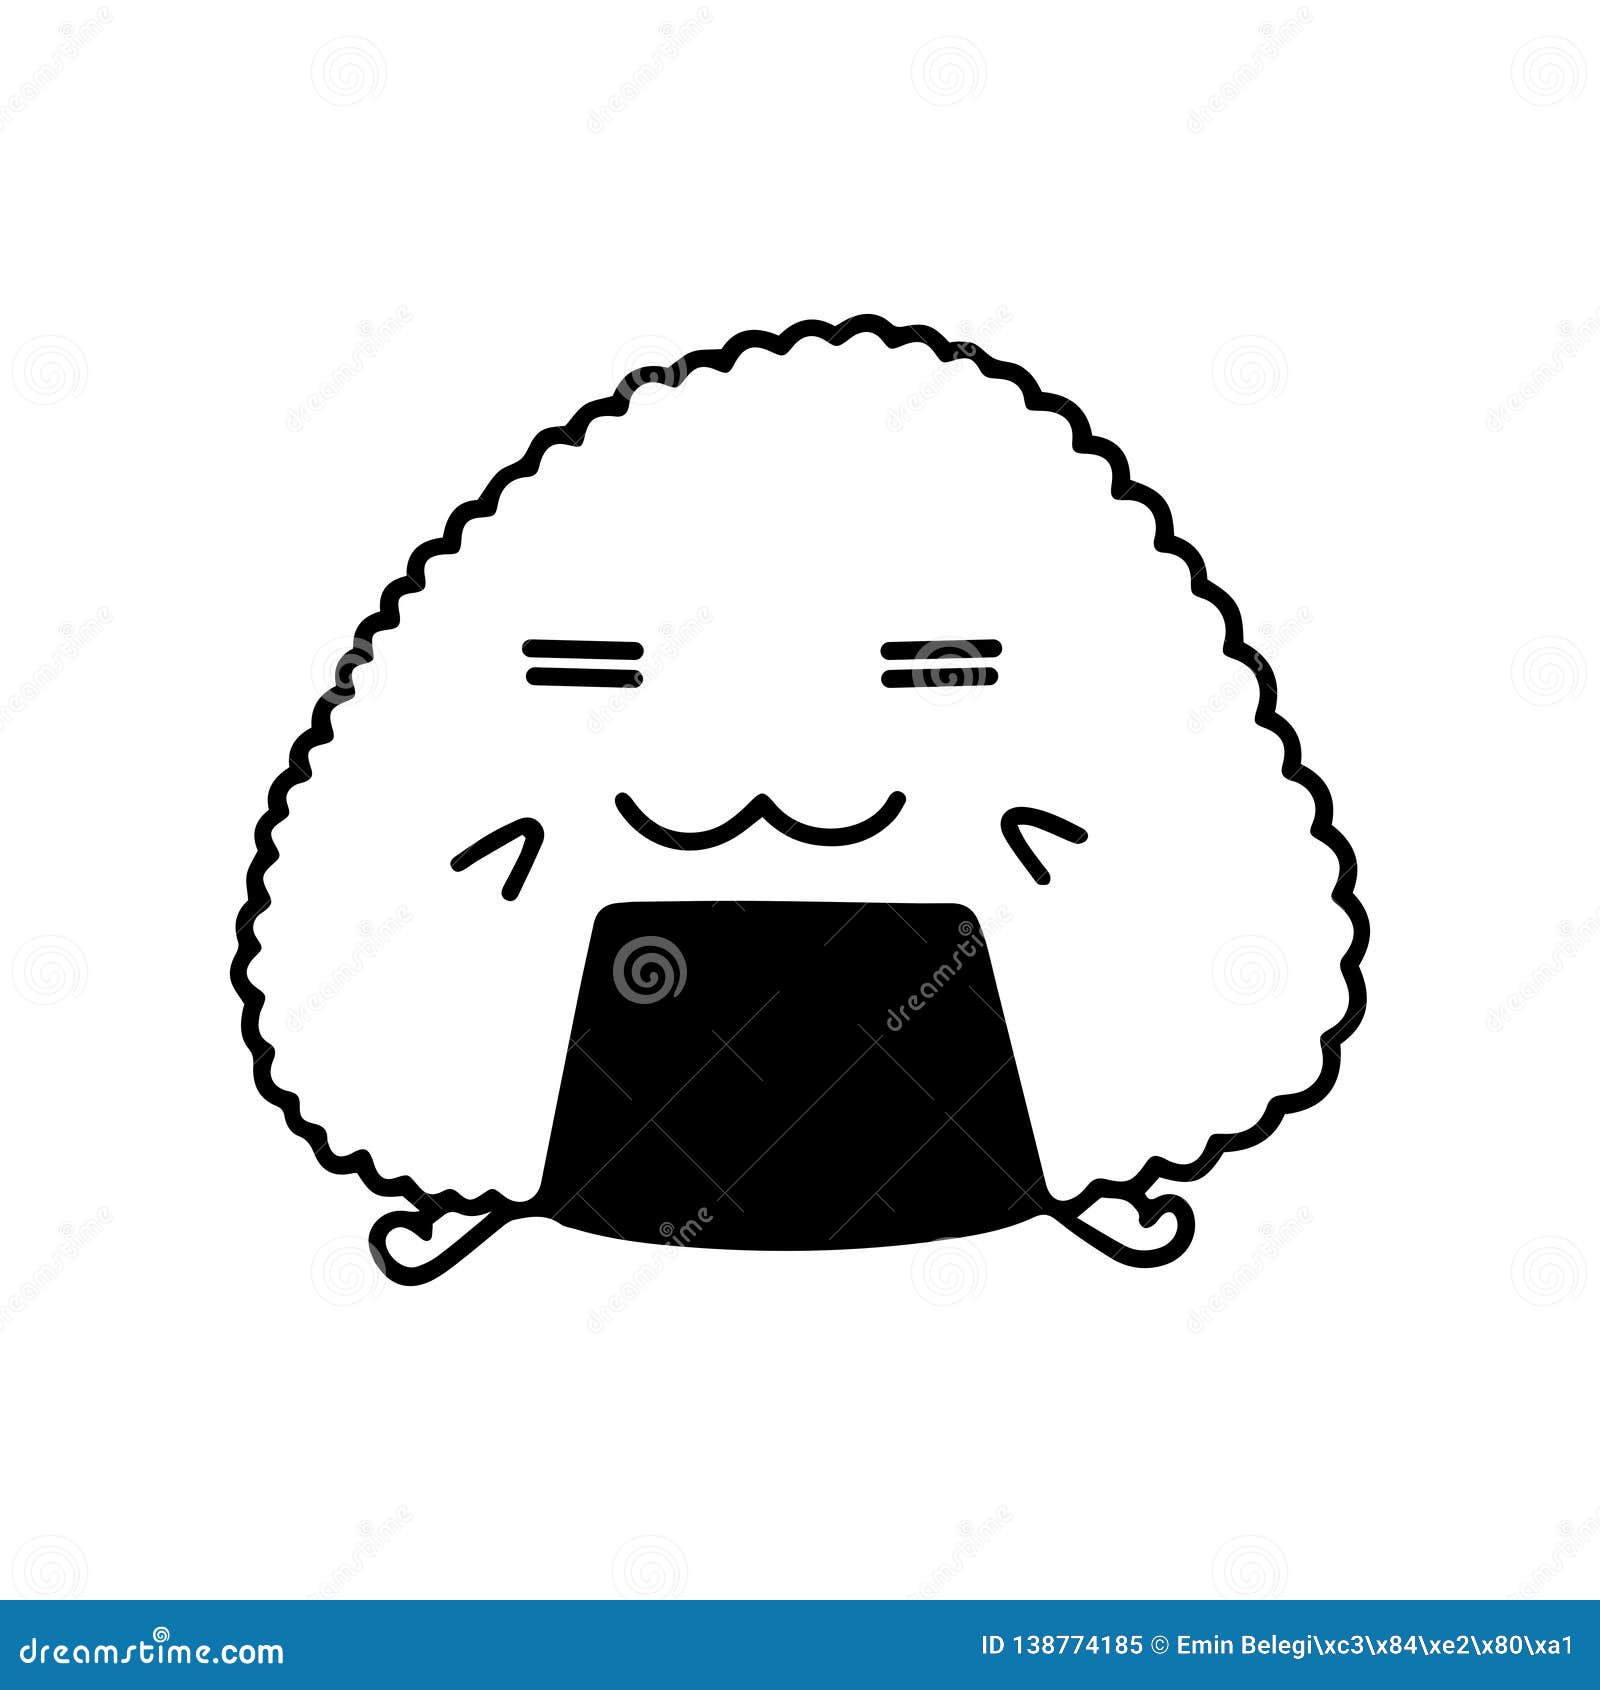 Cute Kawaii Illustration of Smiling Rice Ball Stock Illustration -  Illustration of kawaii, china: 138774185